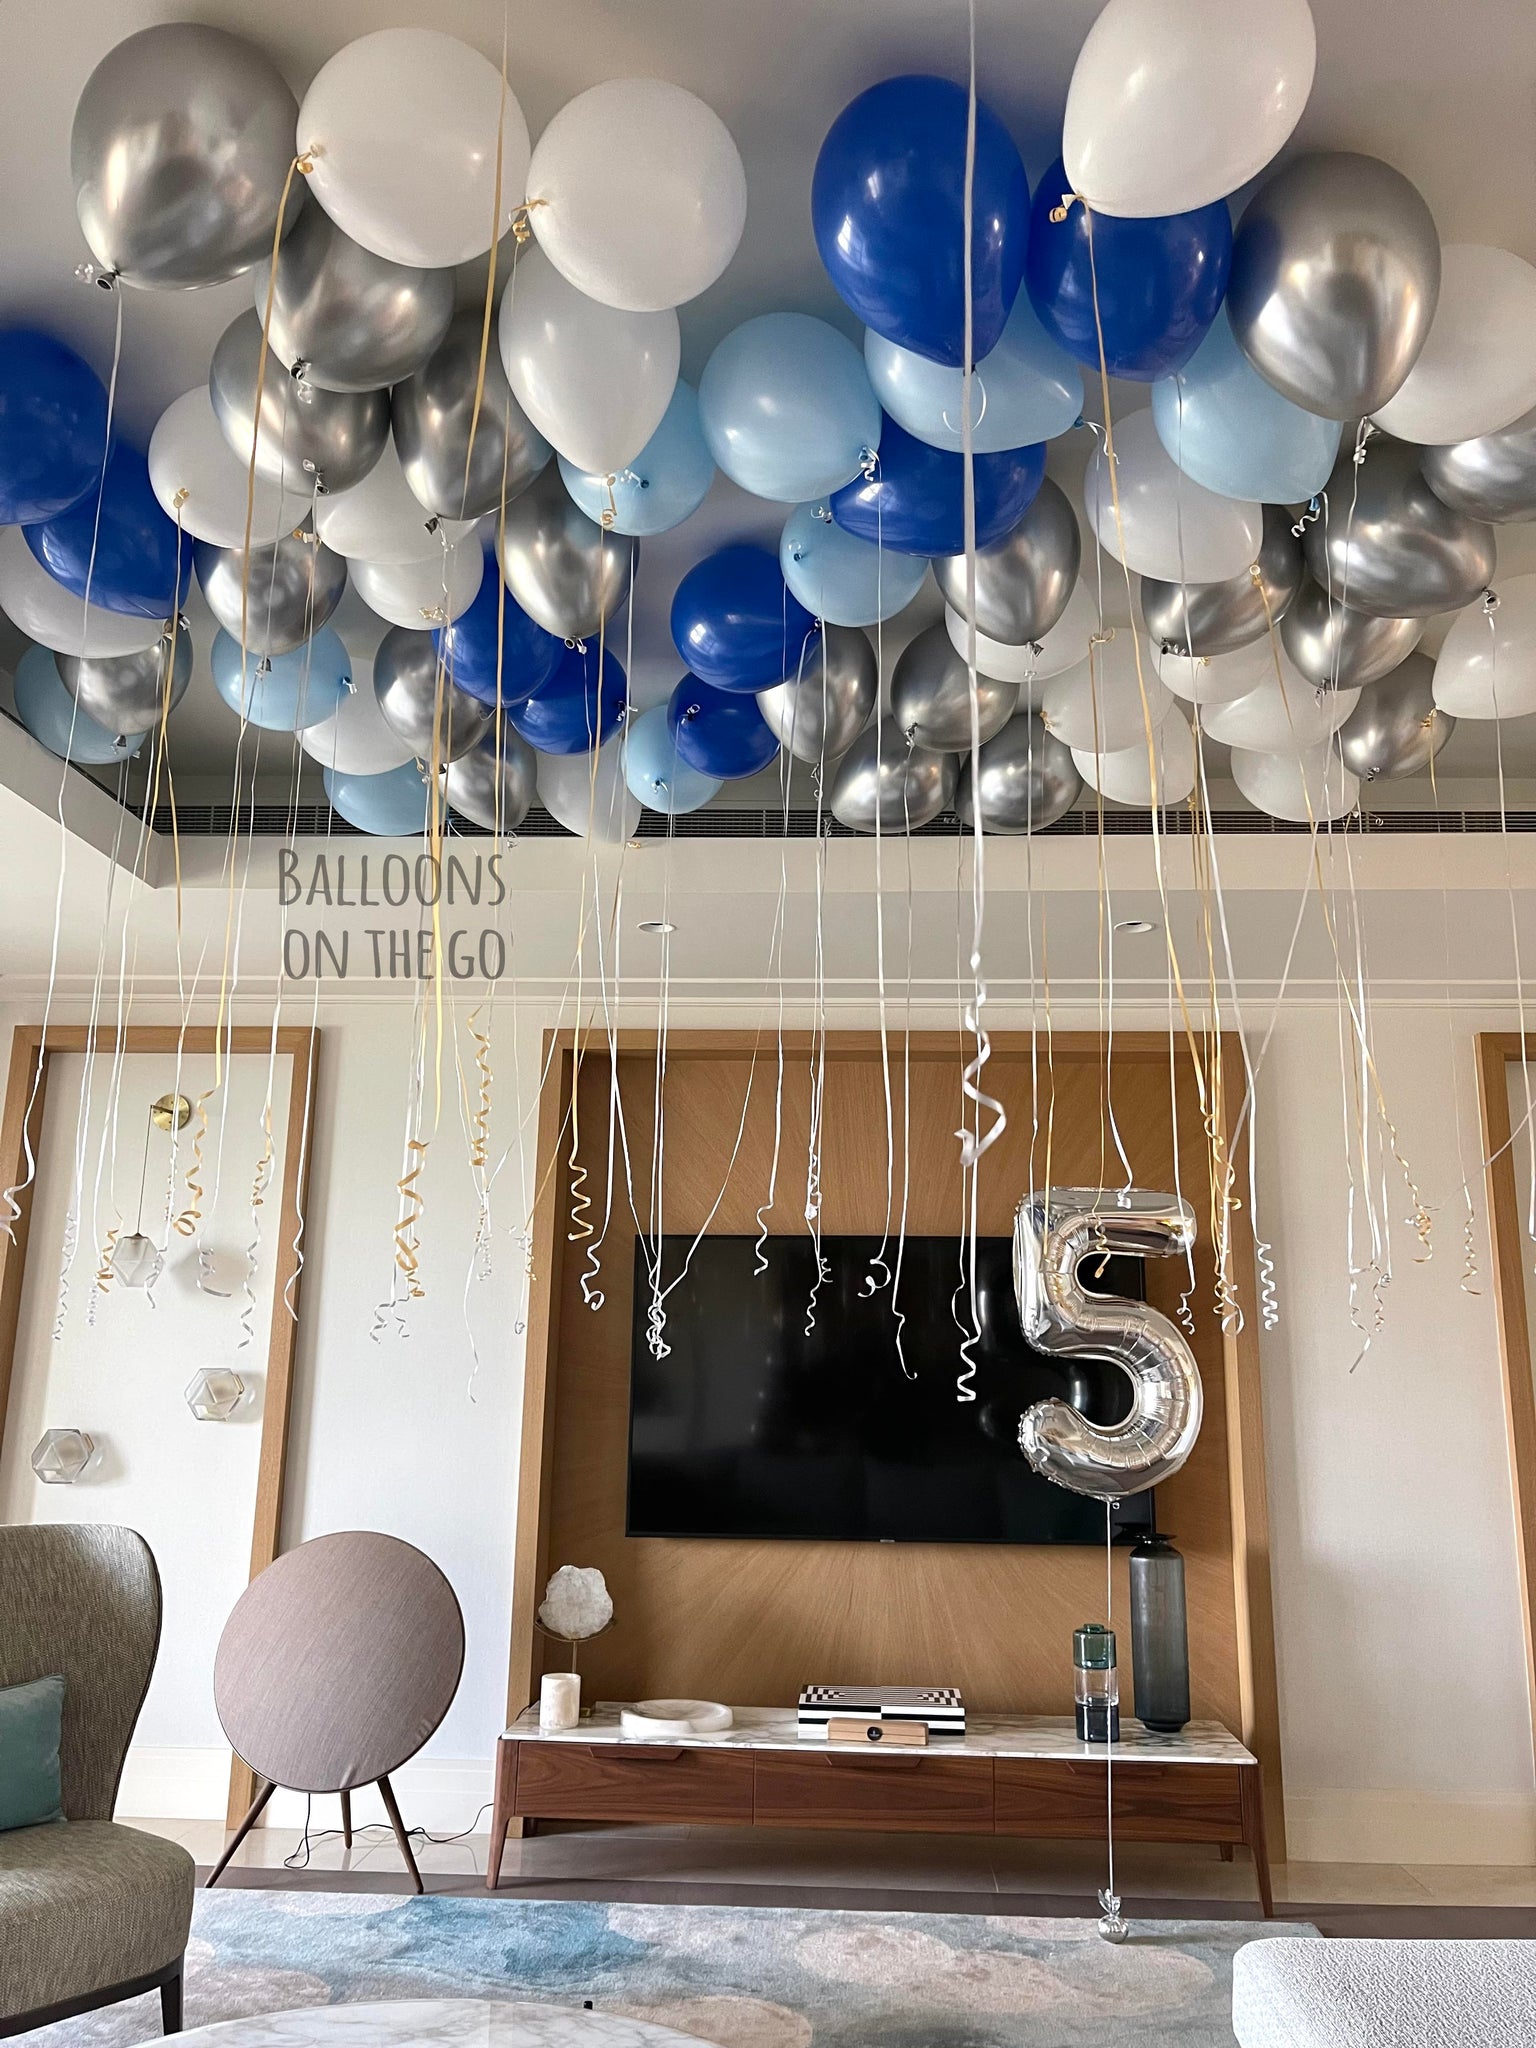 Ceiling Balloons setup